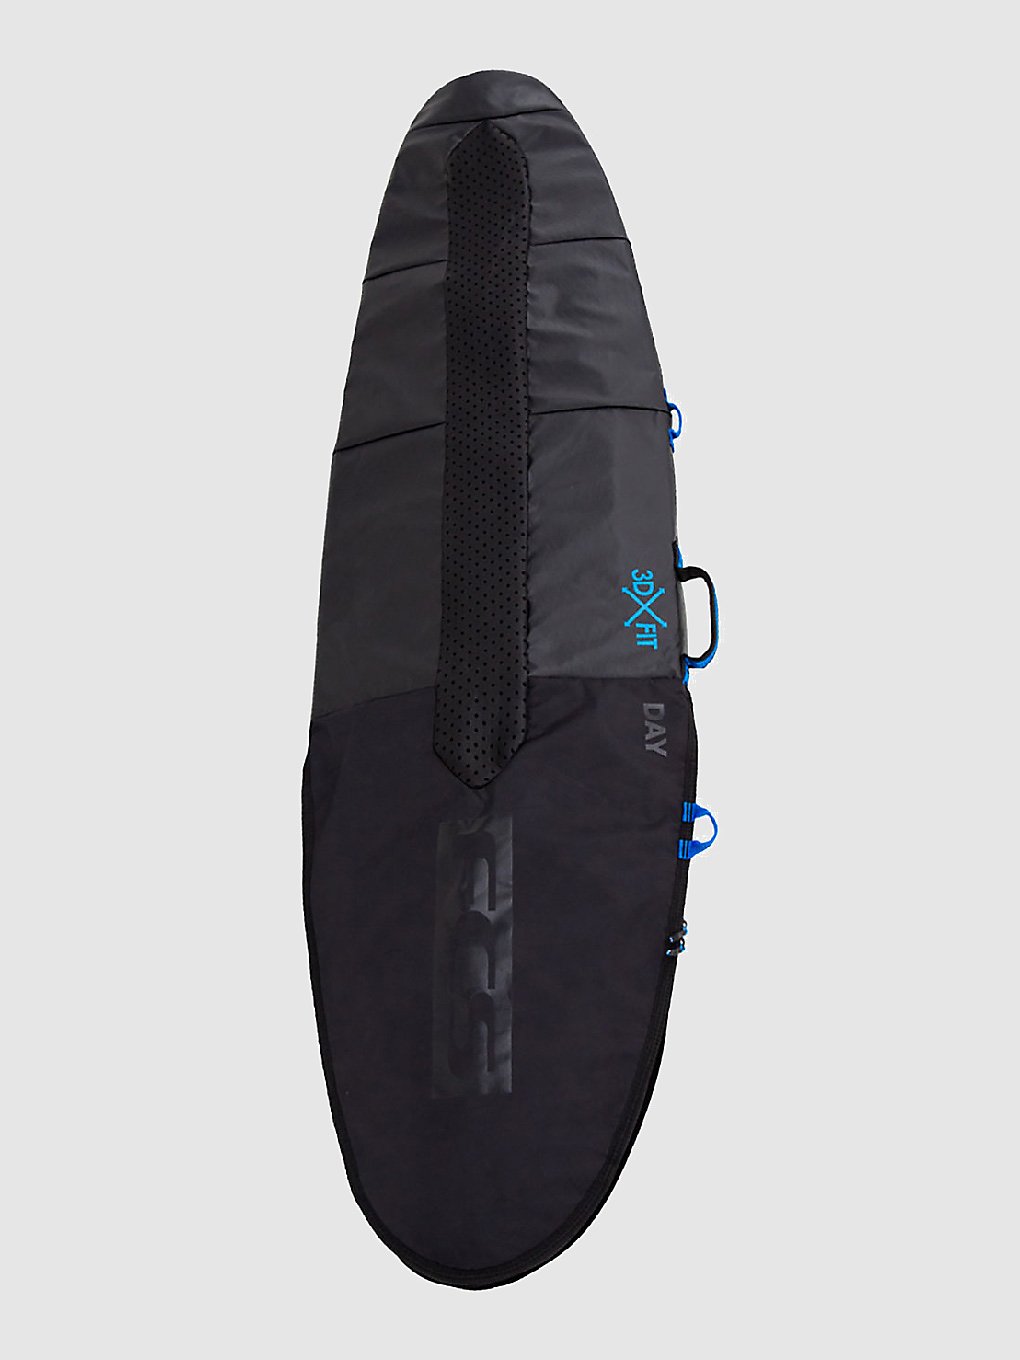 FCS Day Fun Board 5'6 Surfboard-Tasche black kaufen